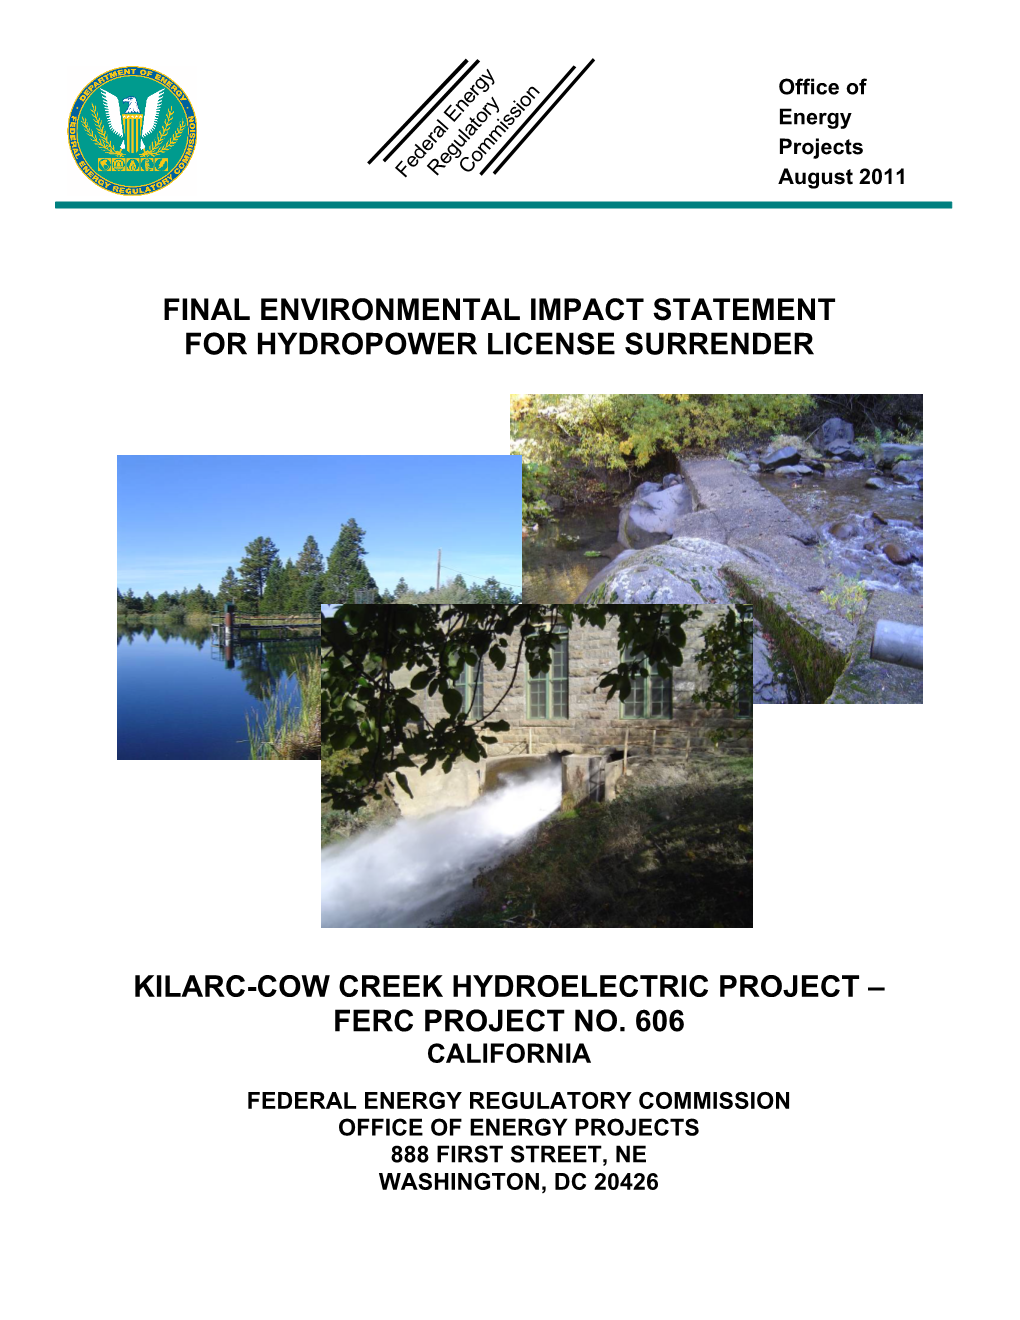 Final Environmental Impact Statement for Hydropower License Surrender